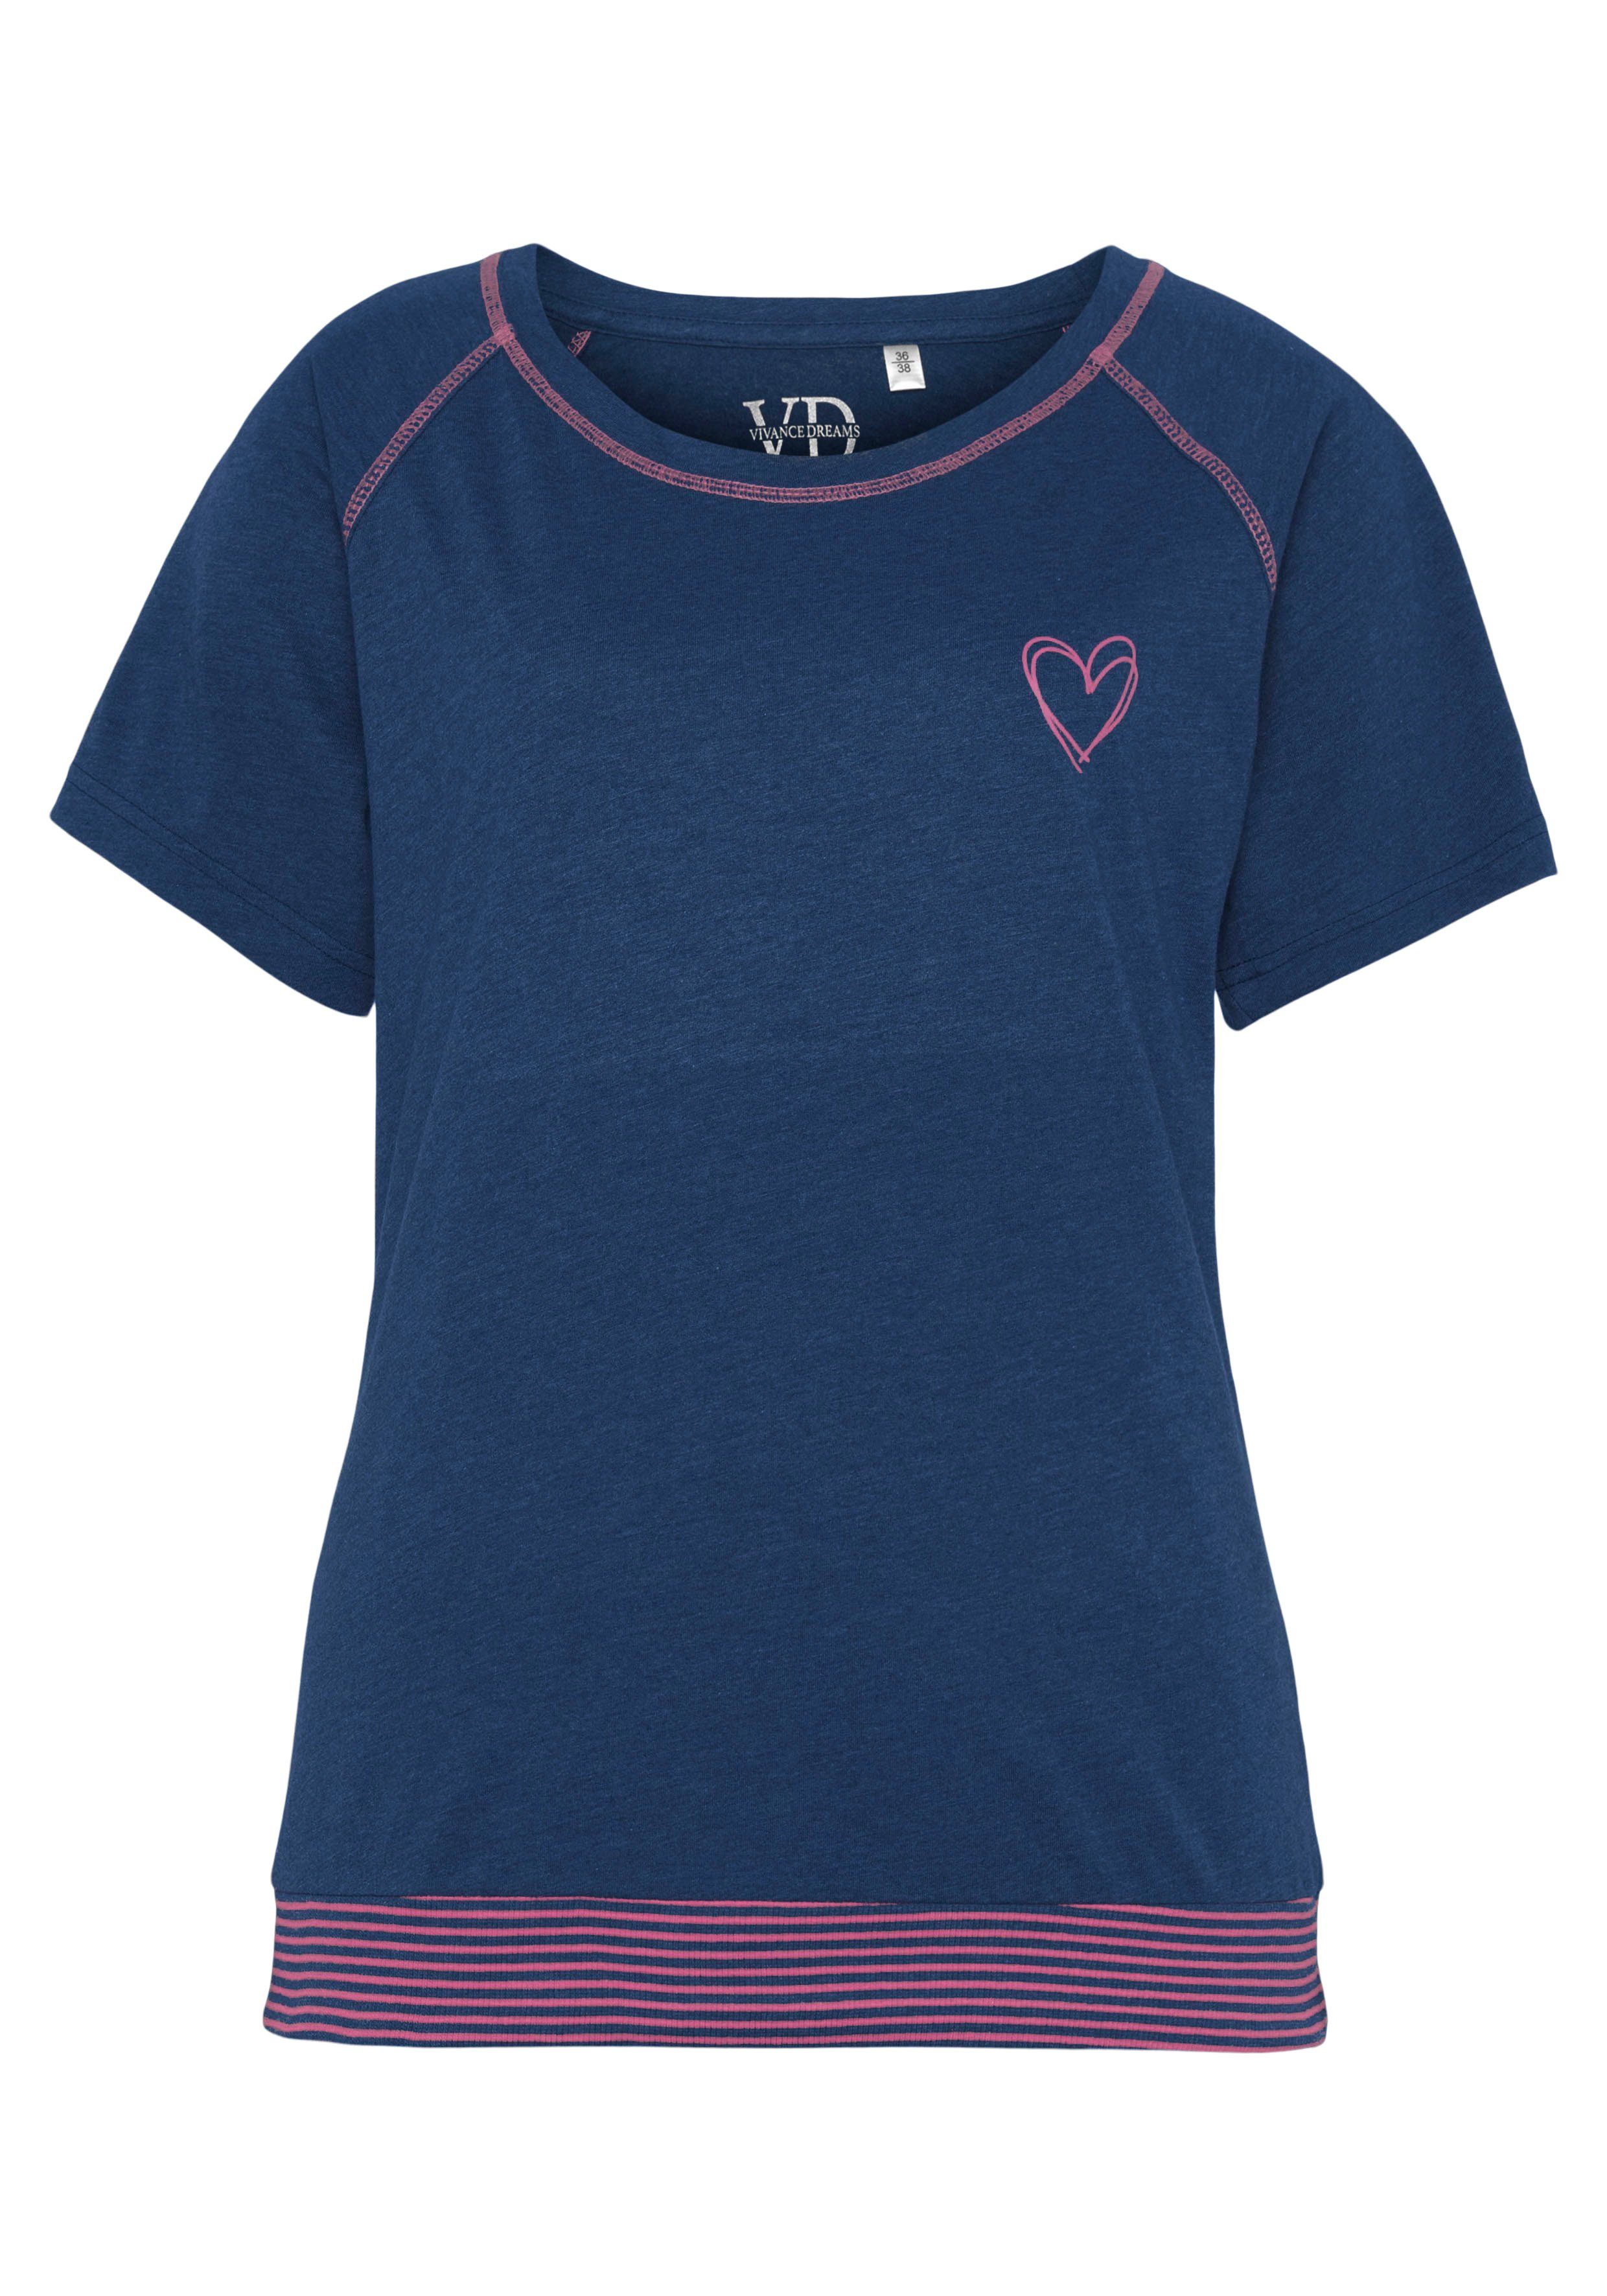 Vivance Dreams Shorty (2 tlg) Neonfarben Flatlock-Nähten in mit dekorativen jeansblau/neon-pink